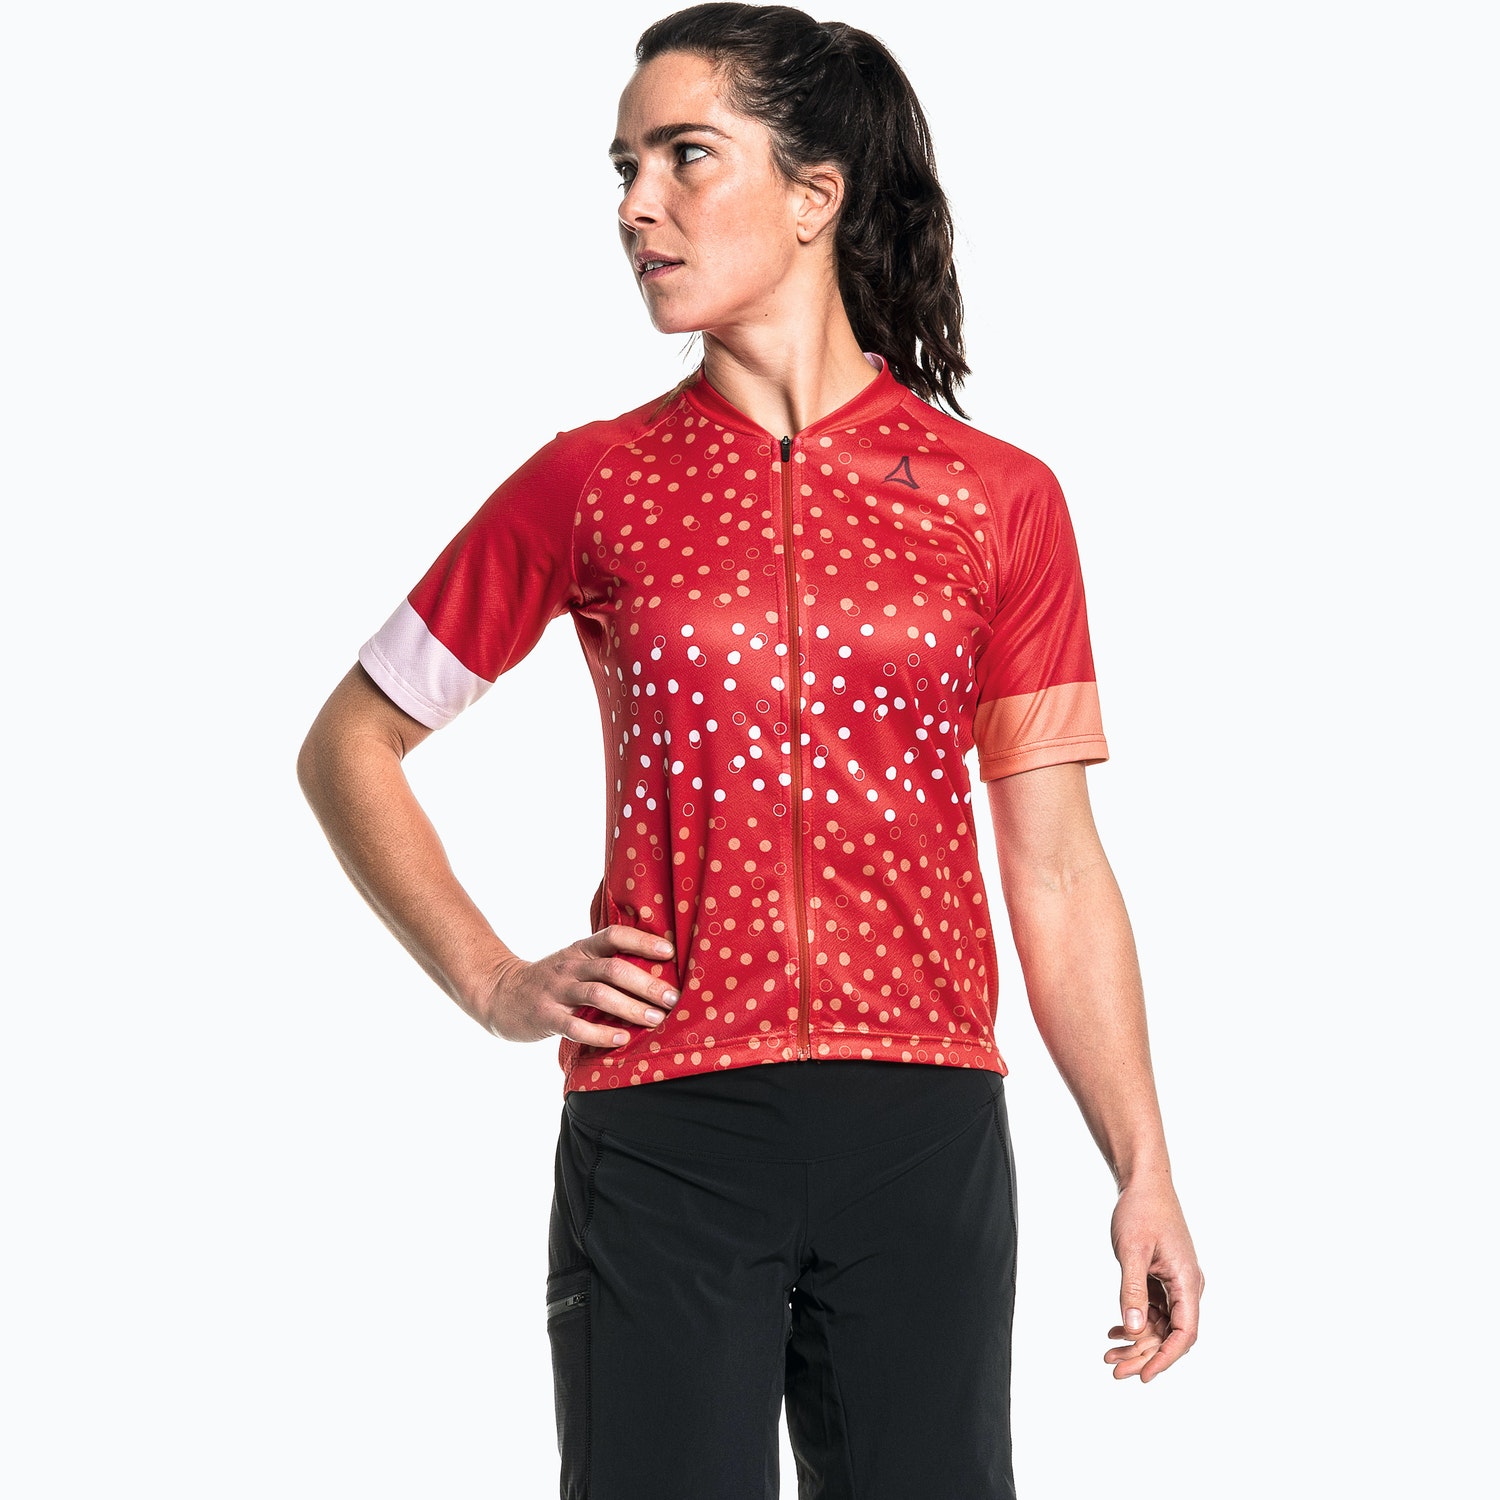 Schöffel Shirt Vertine - Maillot vélo femme